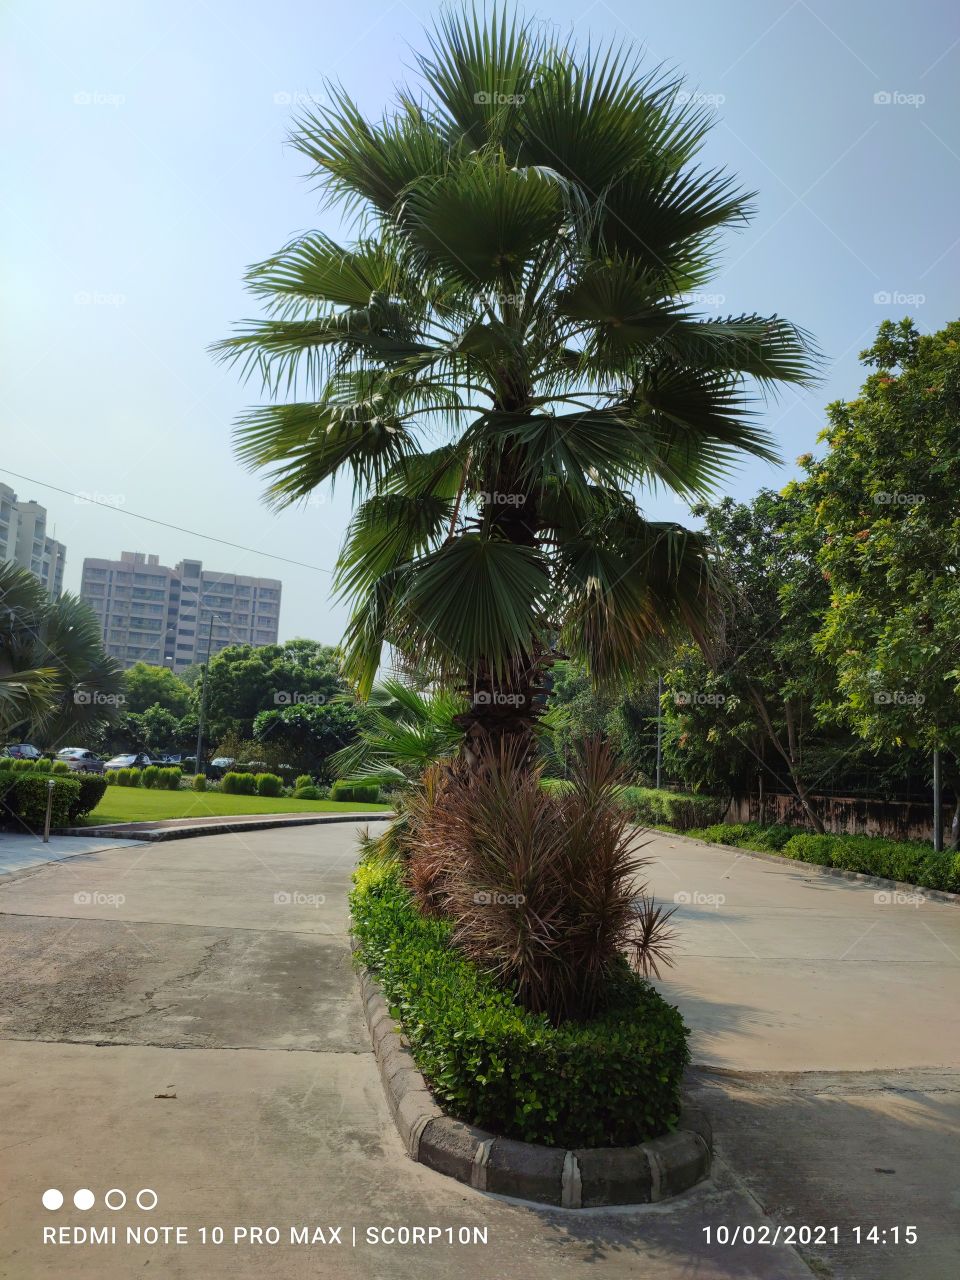 the palm tree